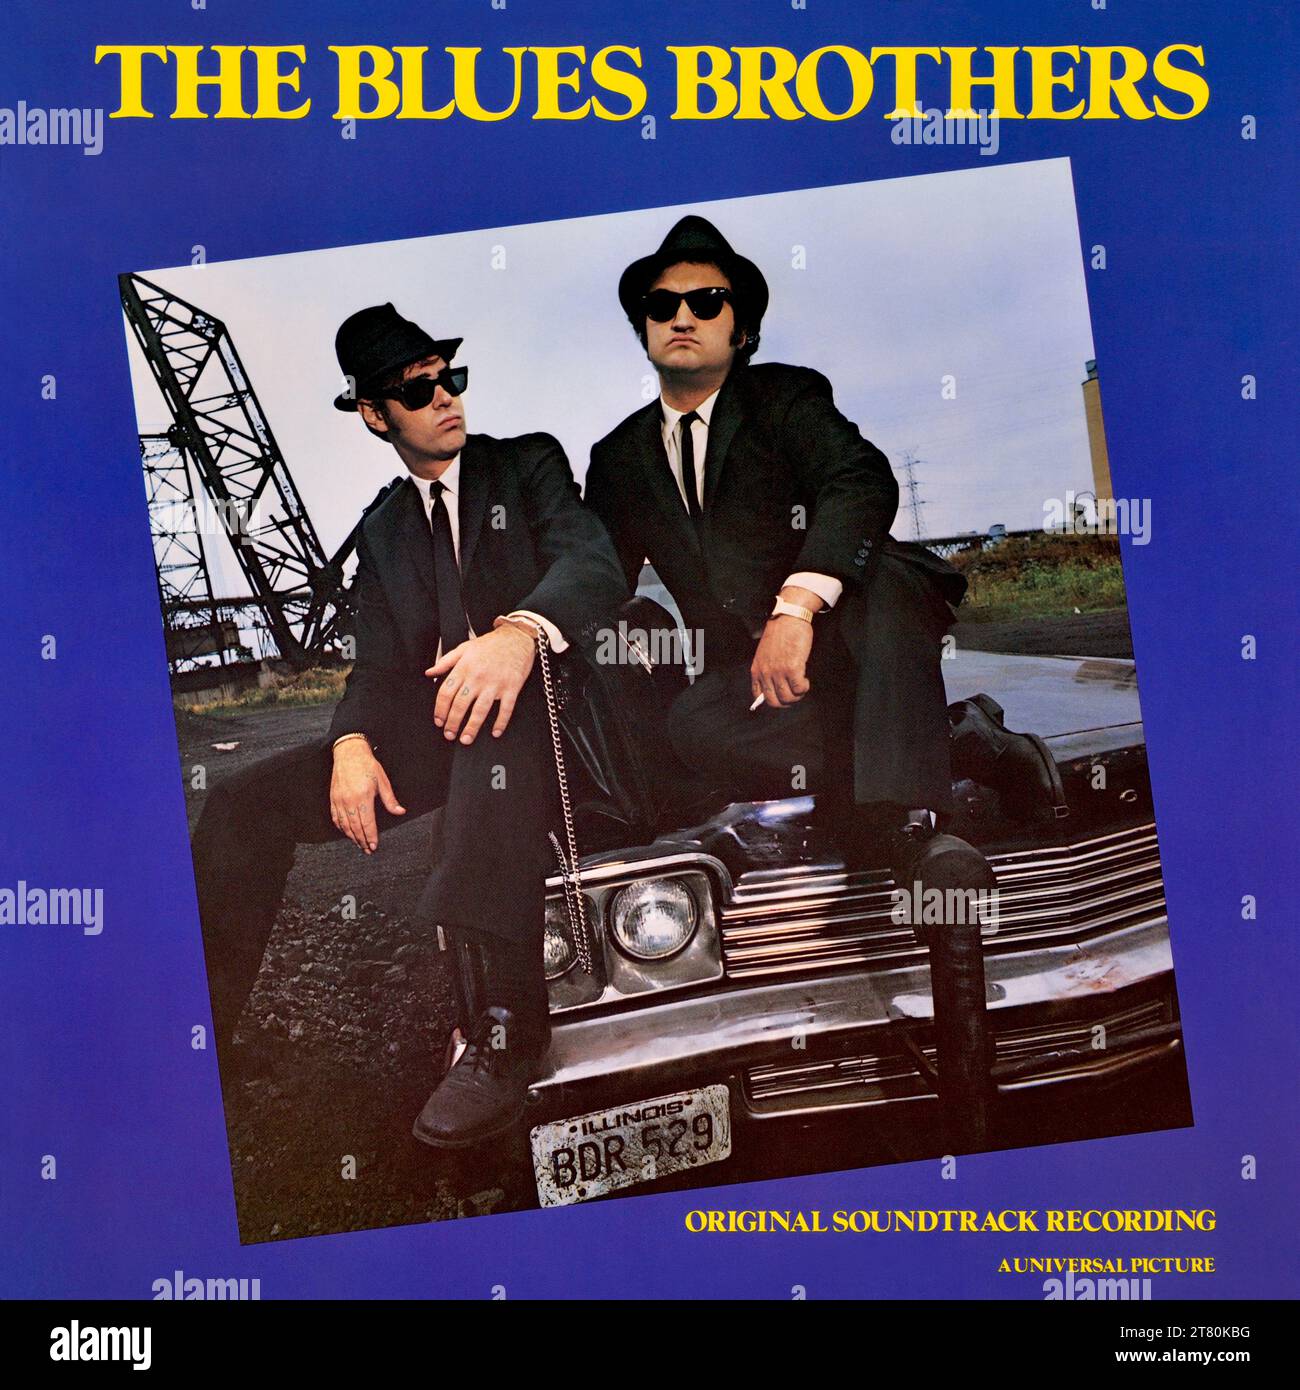 The Blues Brothers - original vinyl album cover - The Blues Brothers (Original Soundtrack Recording) - 1986 Stock Photo